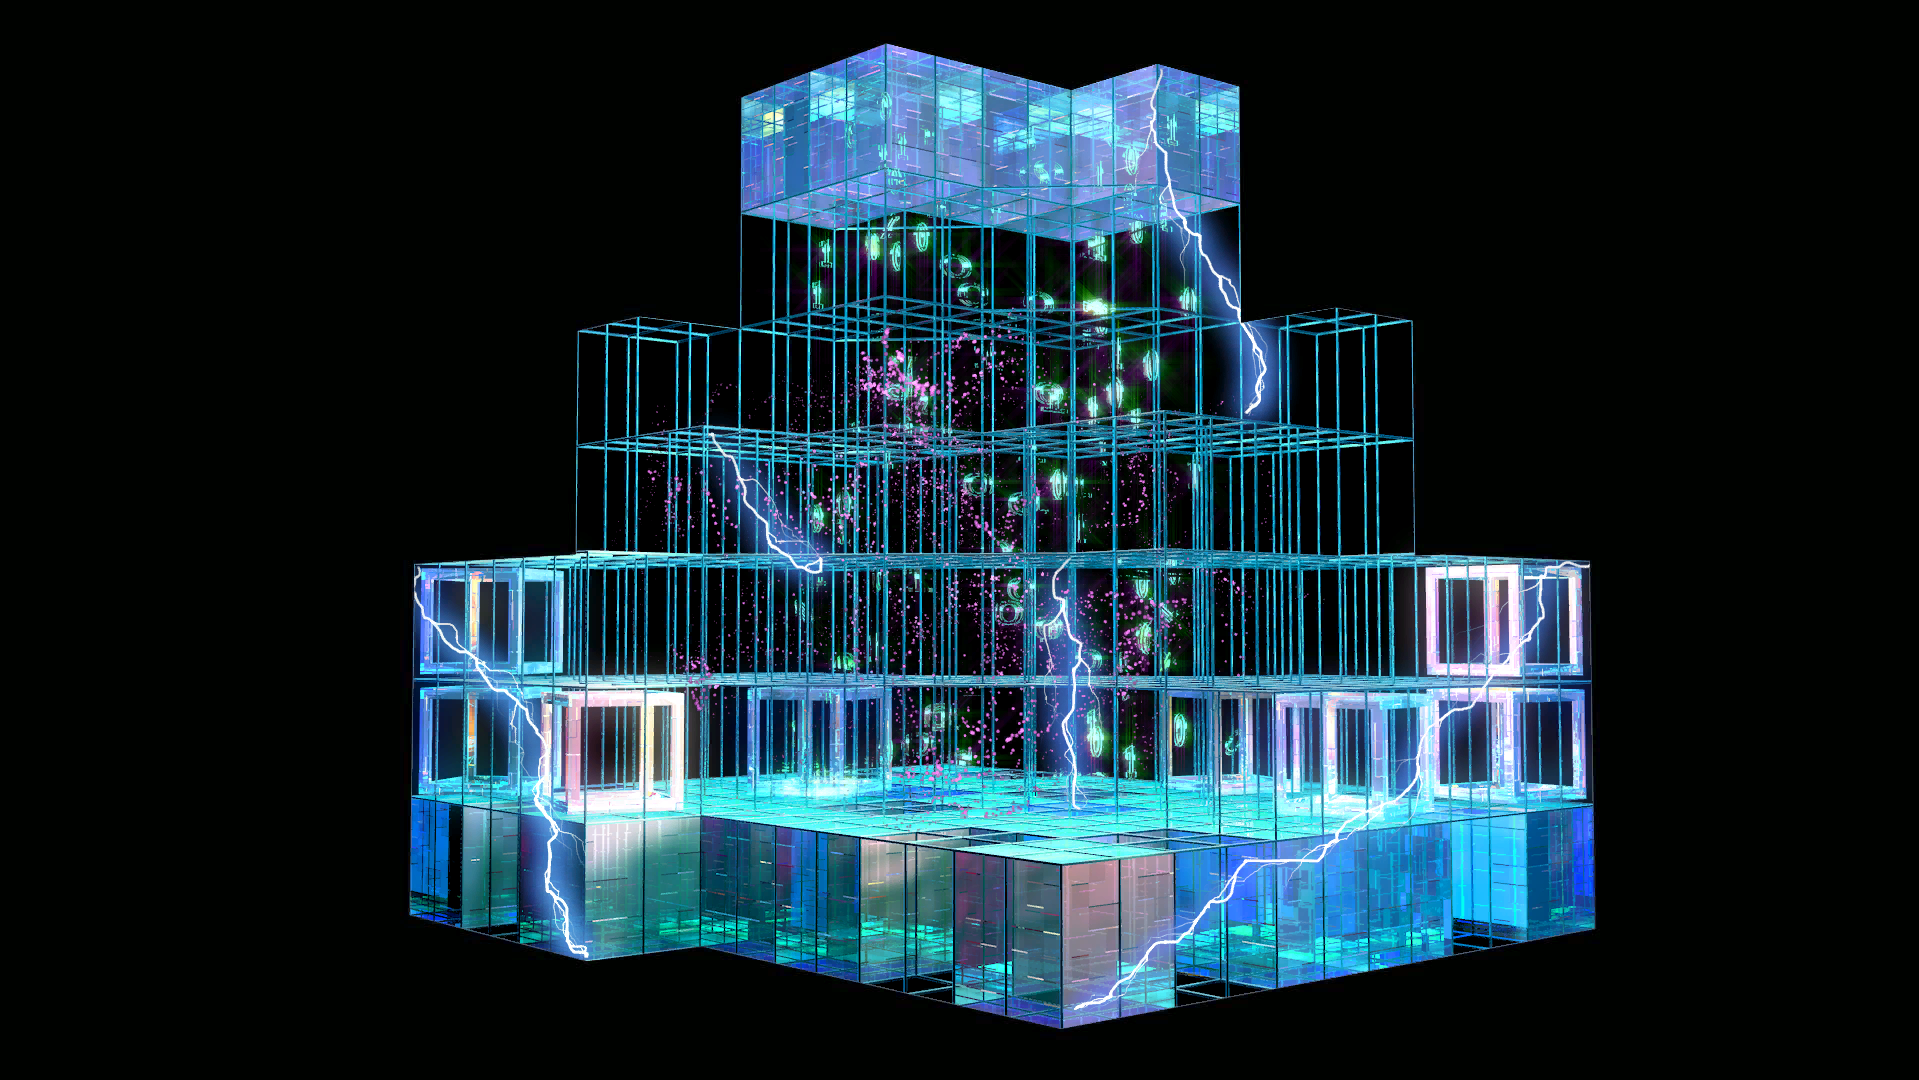 boxes-mapping 裸眼3d秀|三维|建筑/空间|潇洒吃西瓜 - 原创作品